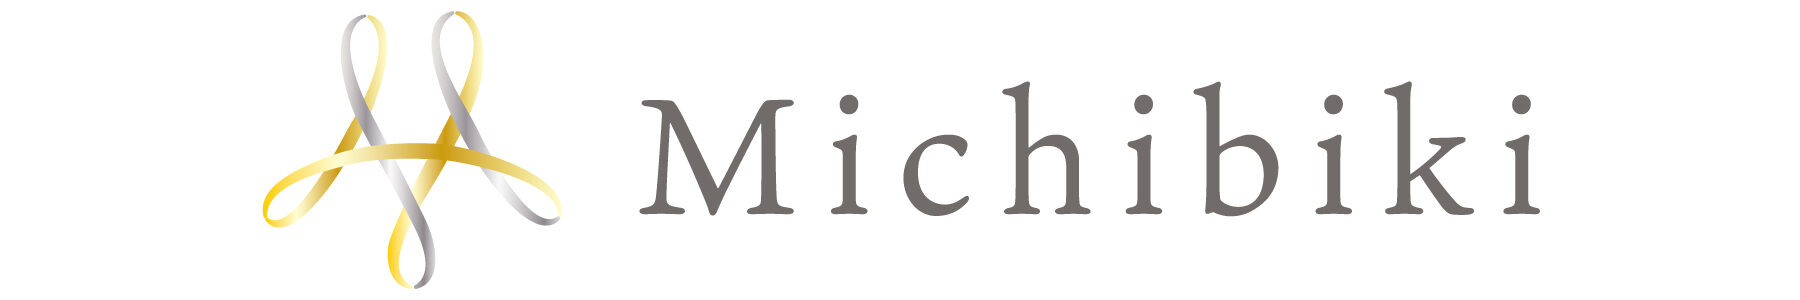 Michibiki Company